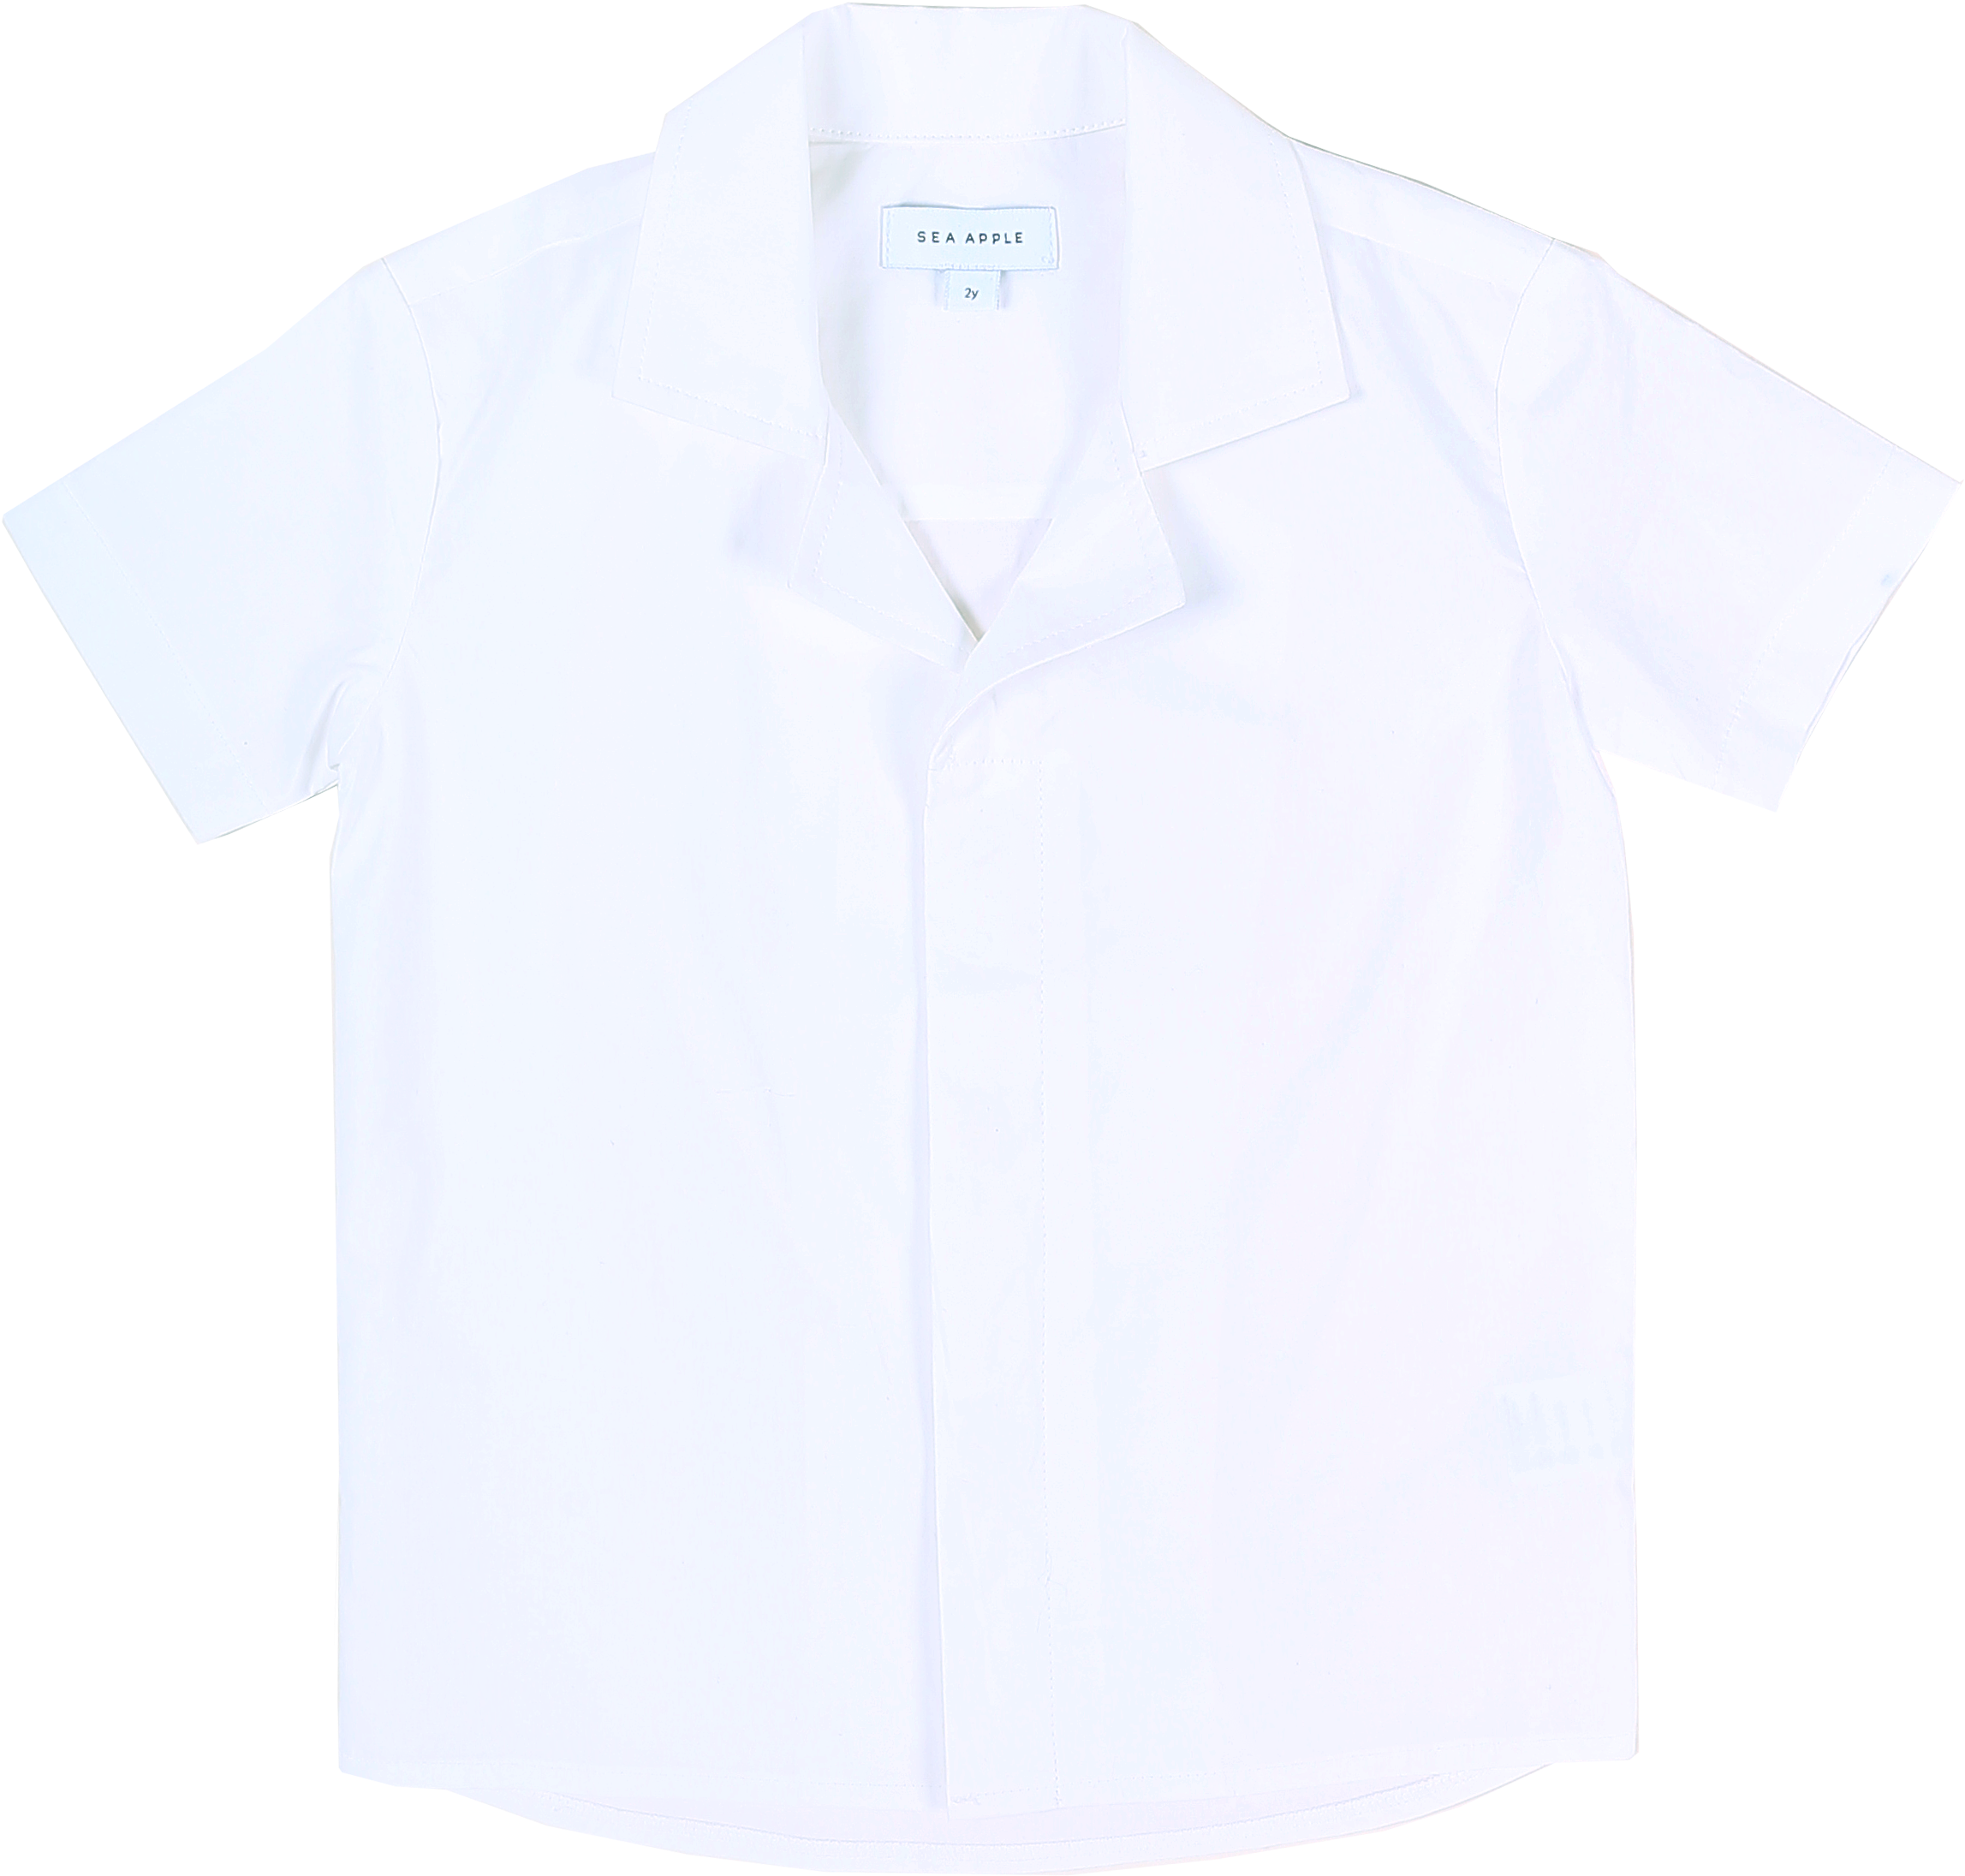 Polo Shirt Png 2295 X 2191